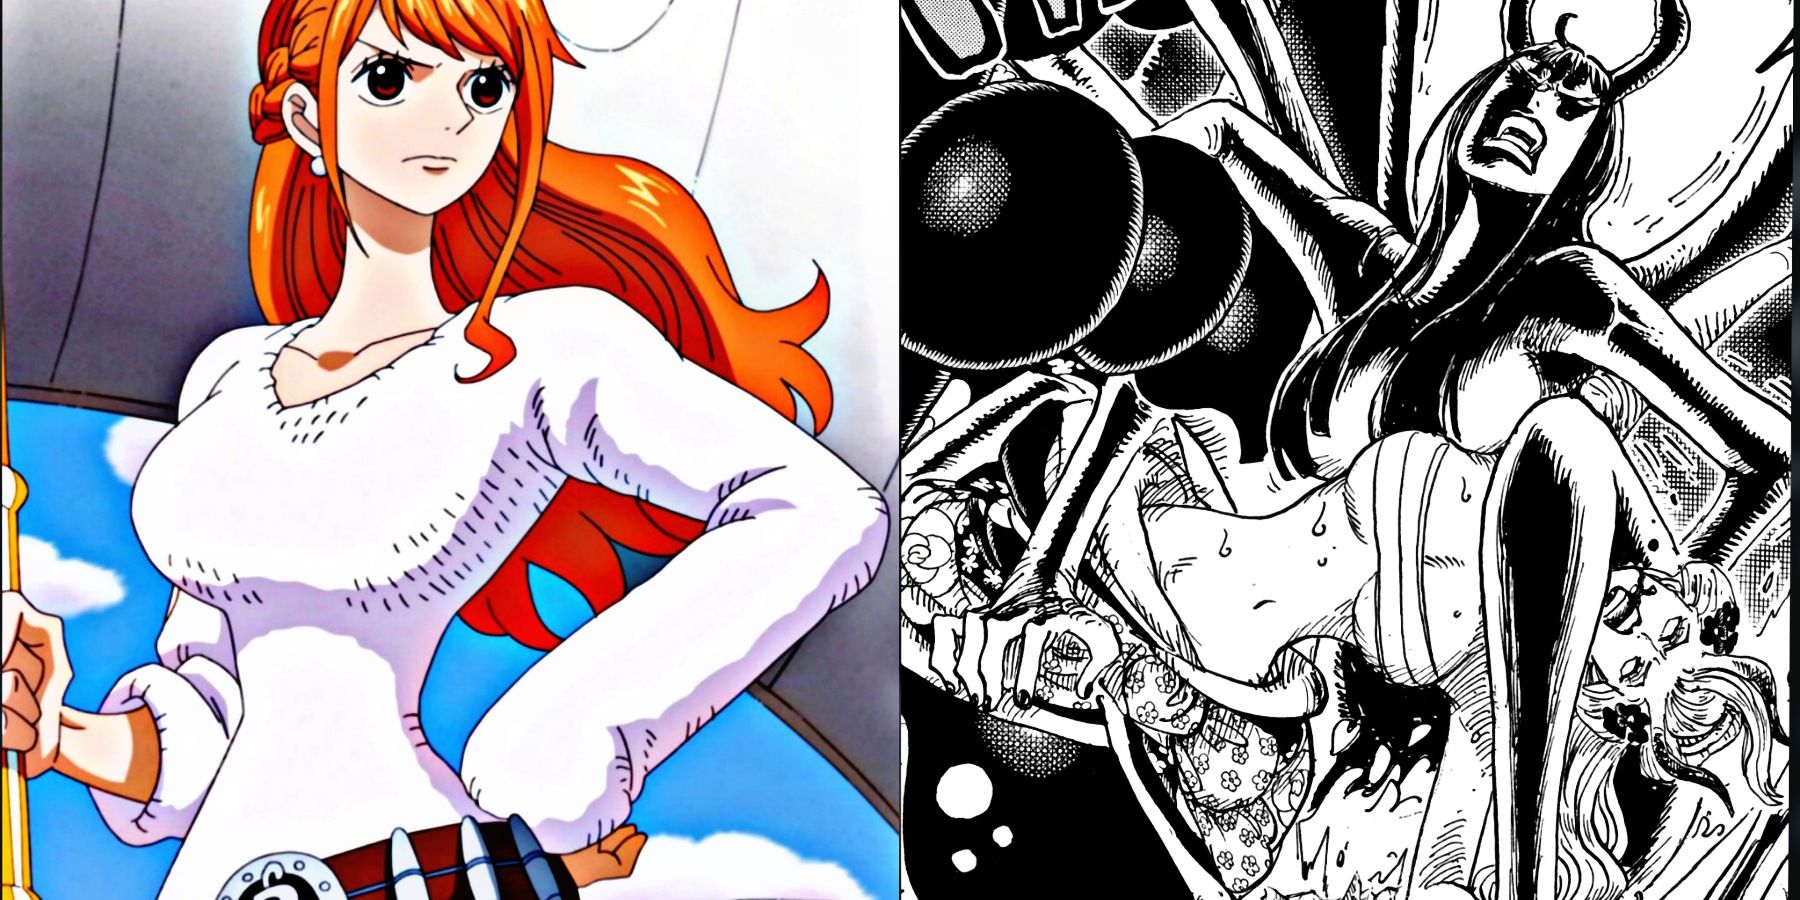 Does Nico Robin use Haki in One Piece?